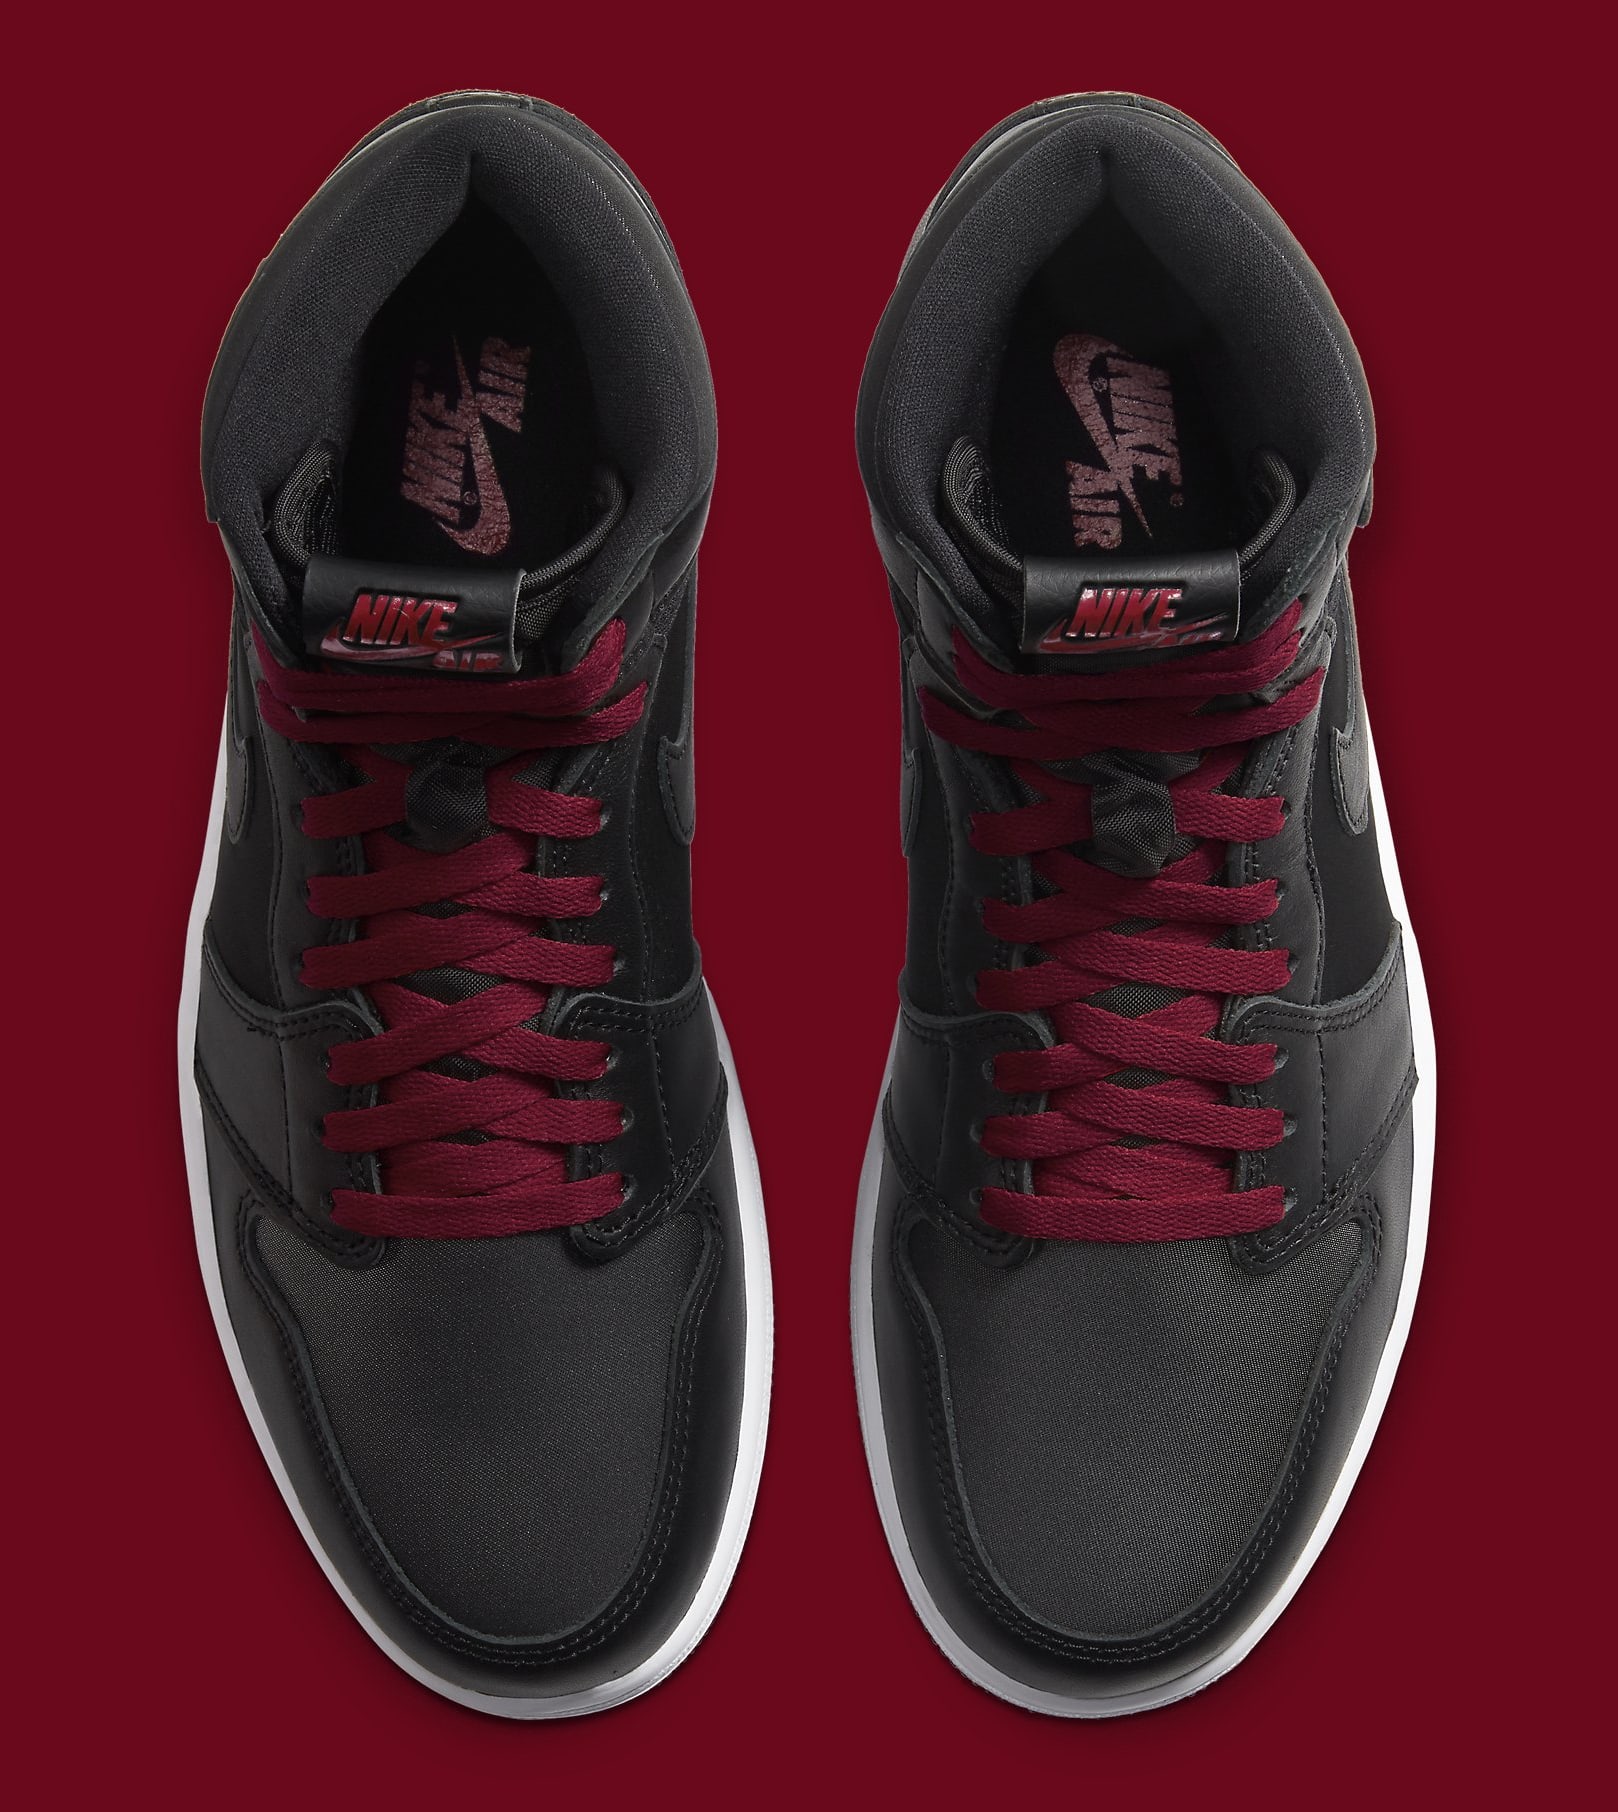 Air Jordan 1 High OG &quot;Black Satin&quot; Coming Soon: Official Photos